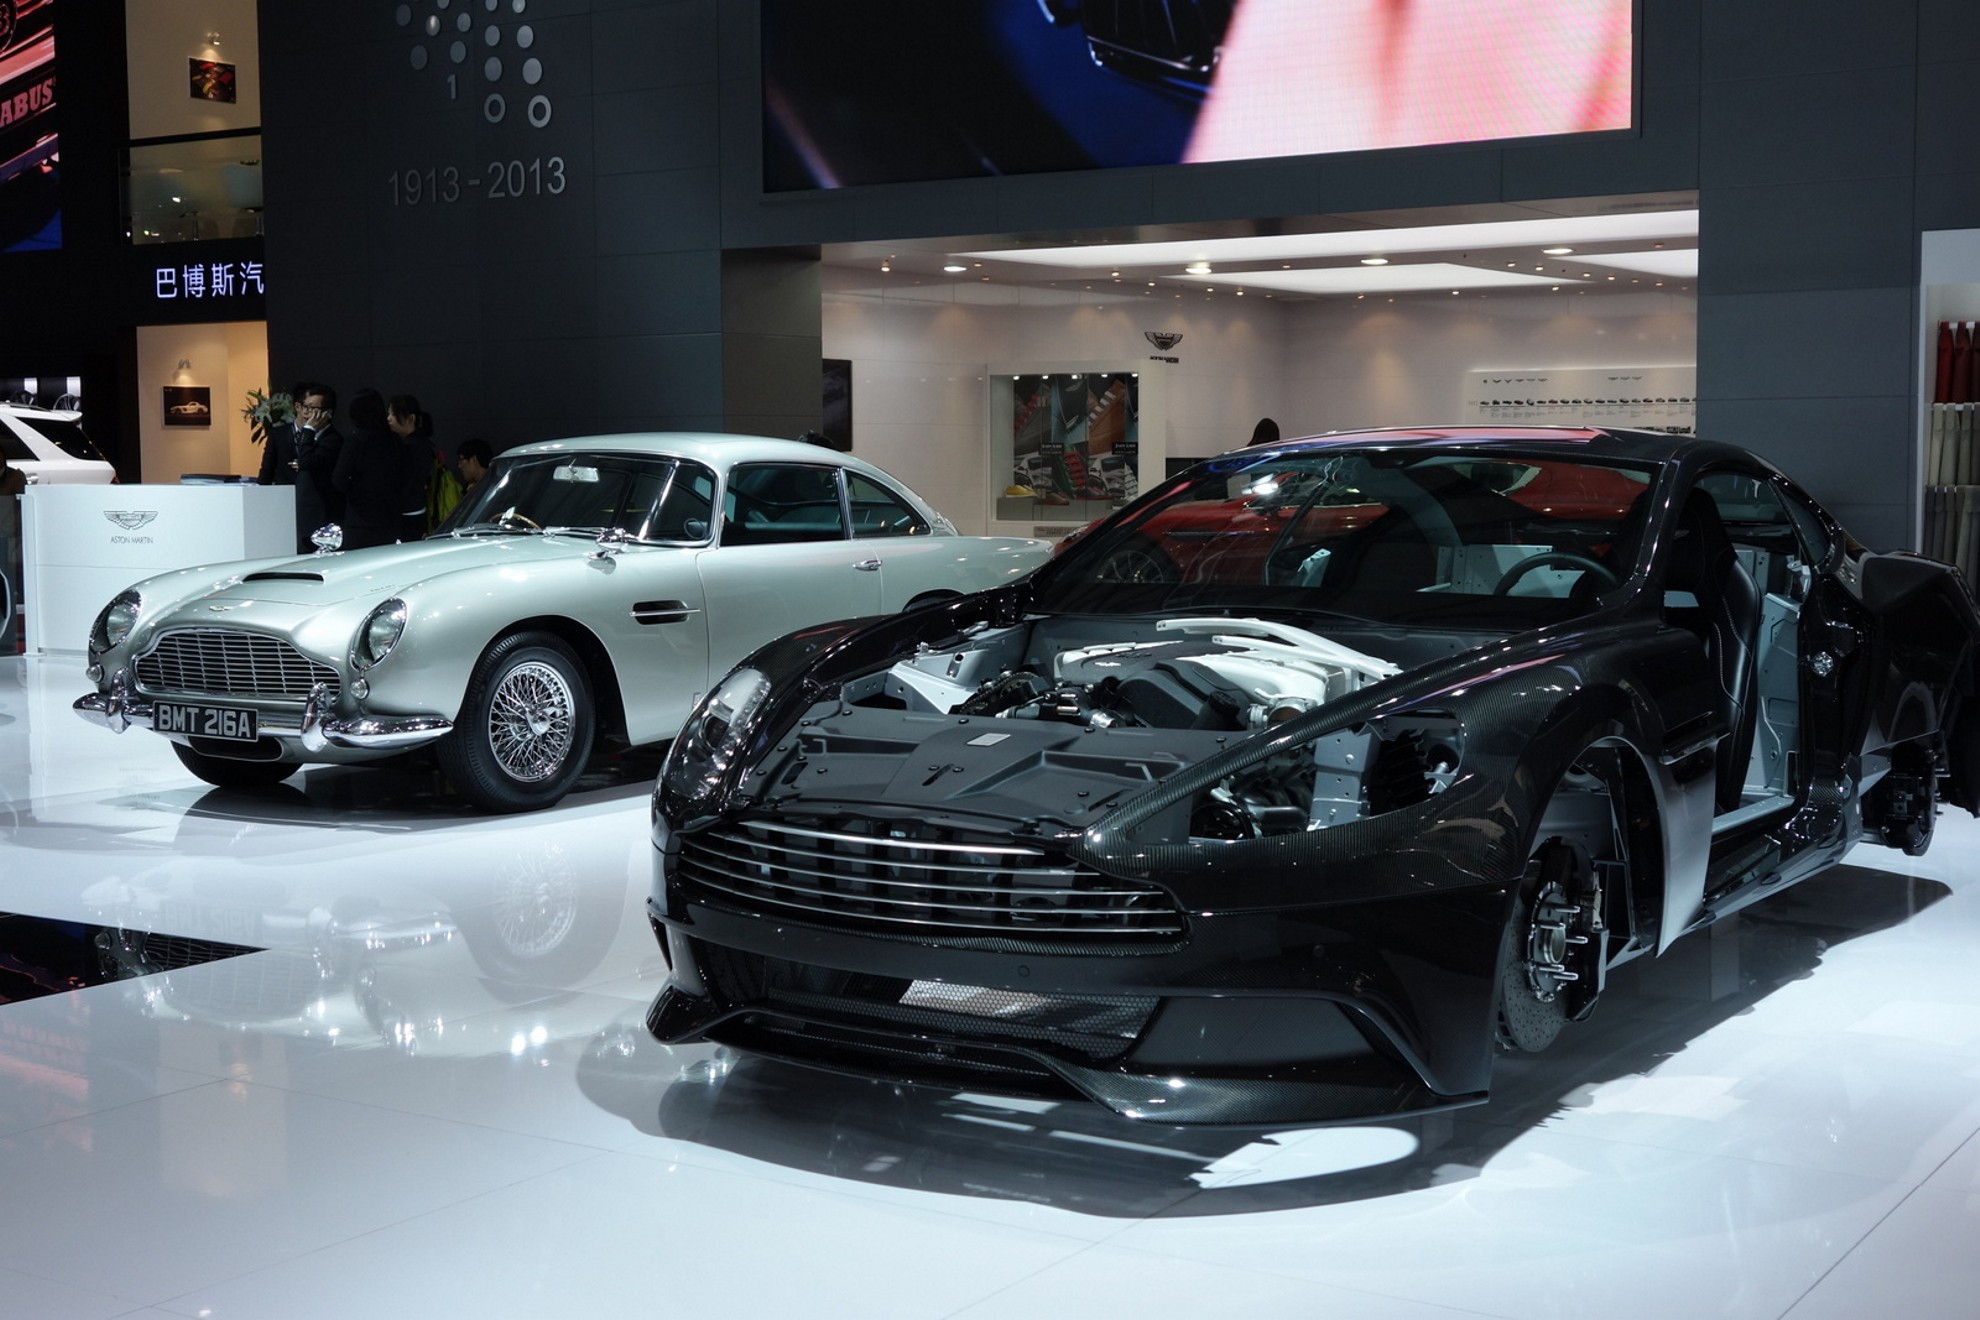 Images: Aston Martin Shanghai Auto Show 2013